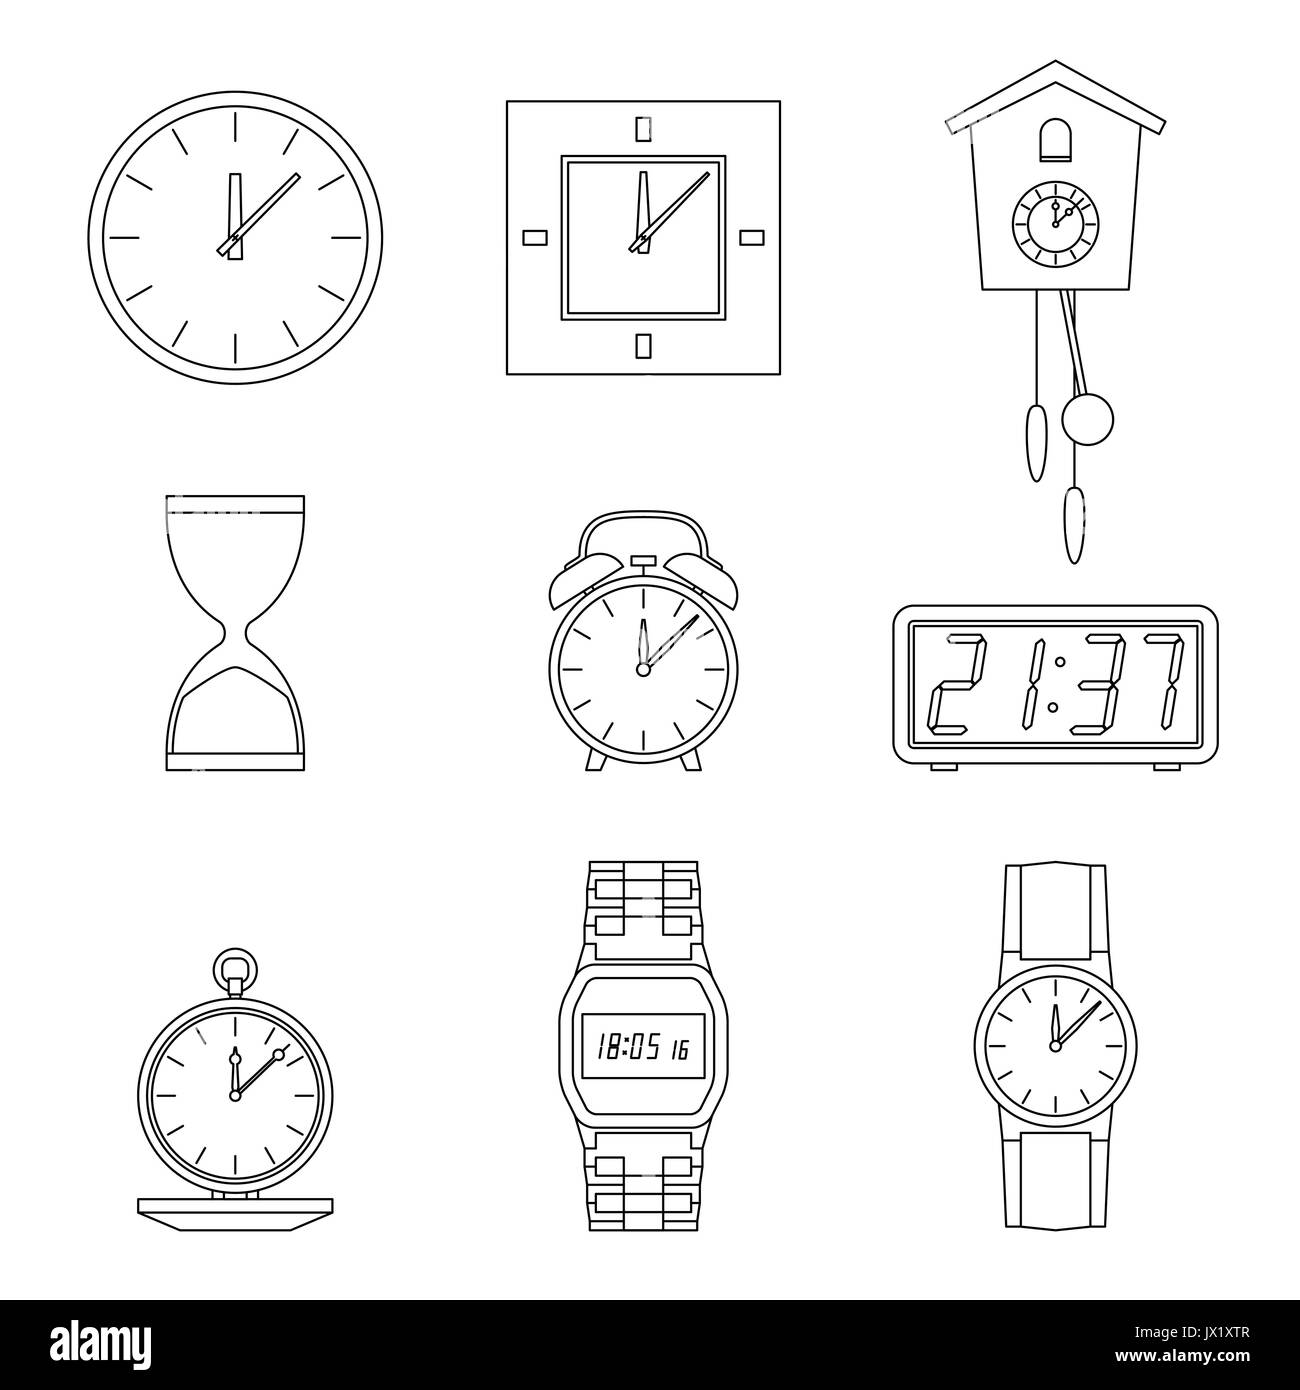 Clock line icons. Stock Vector